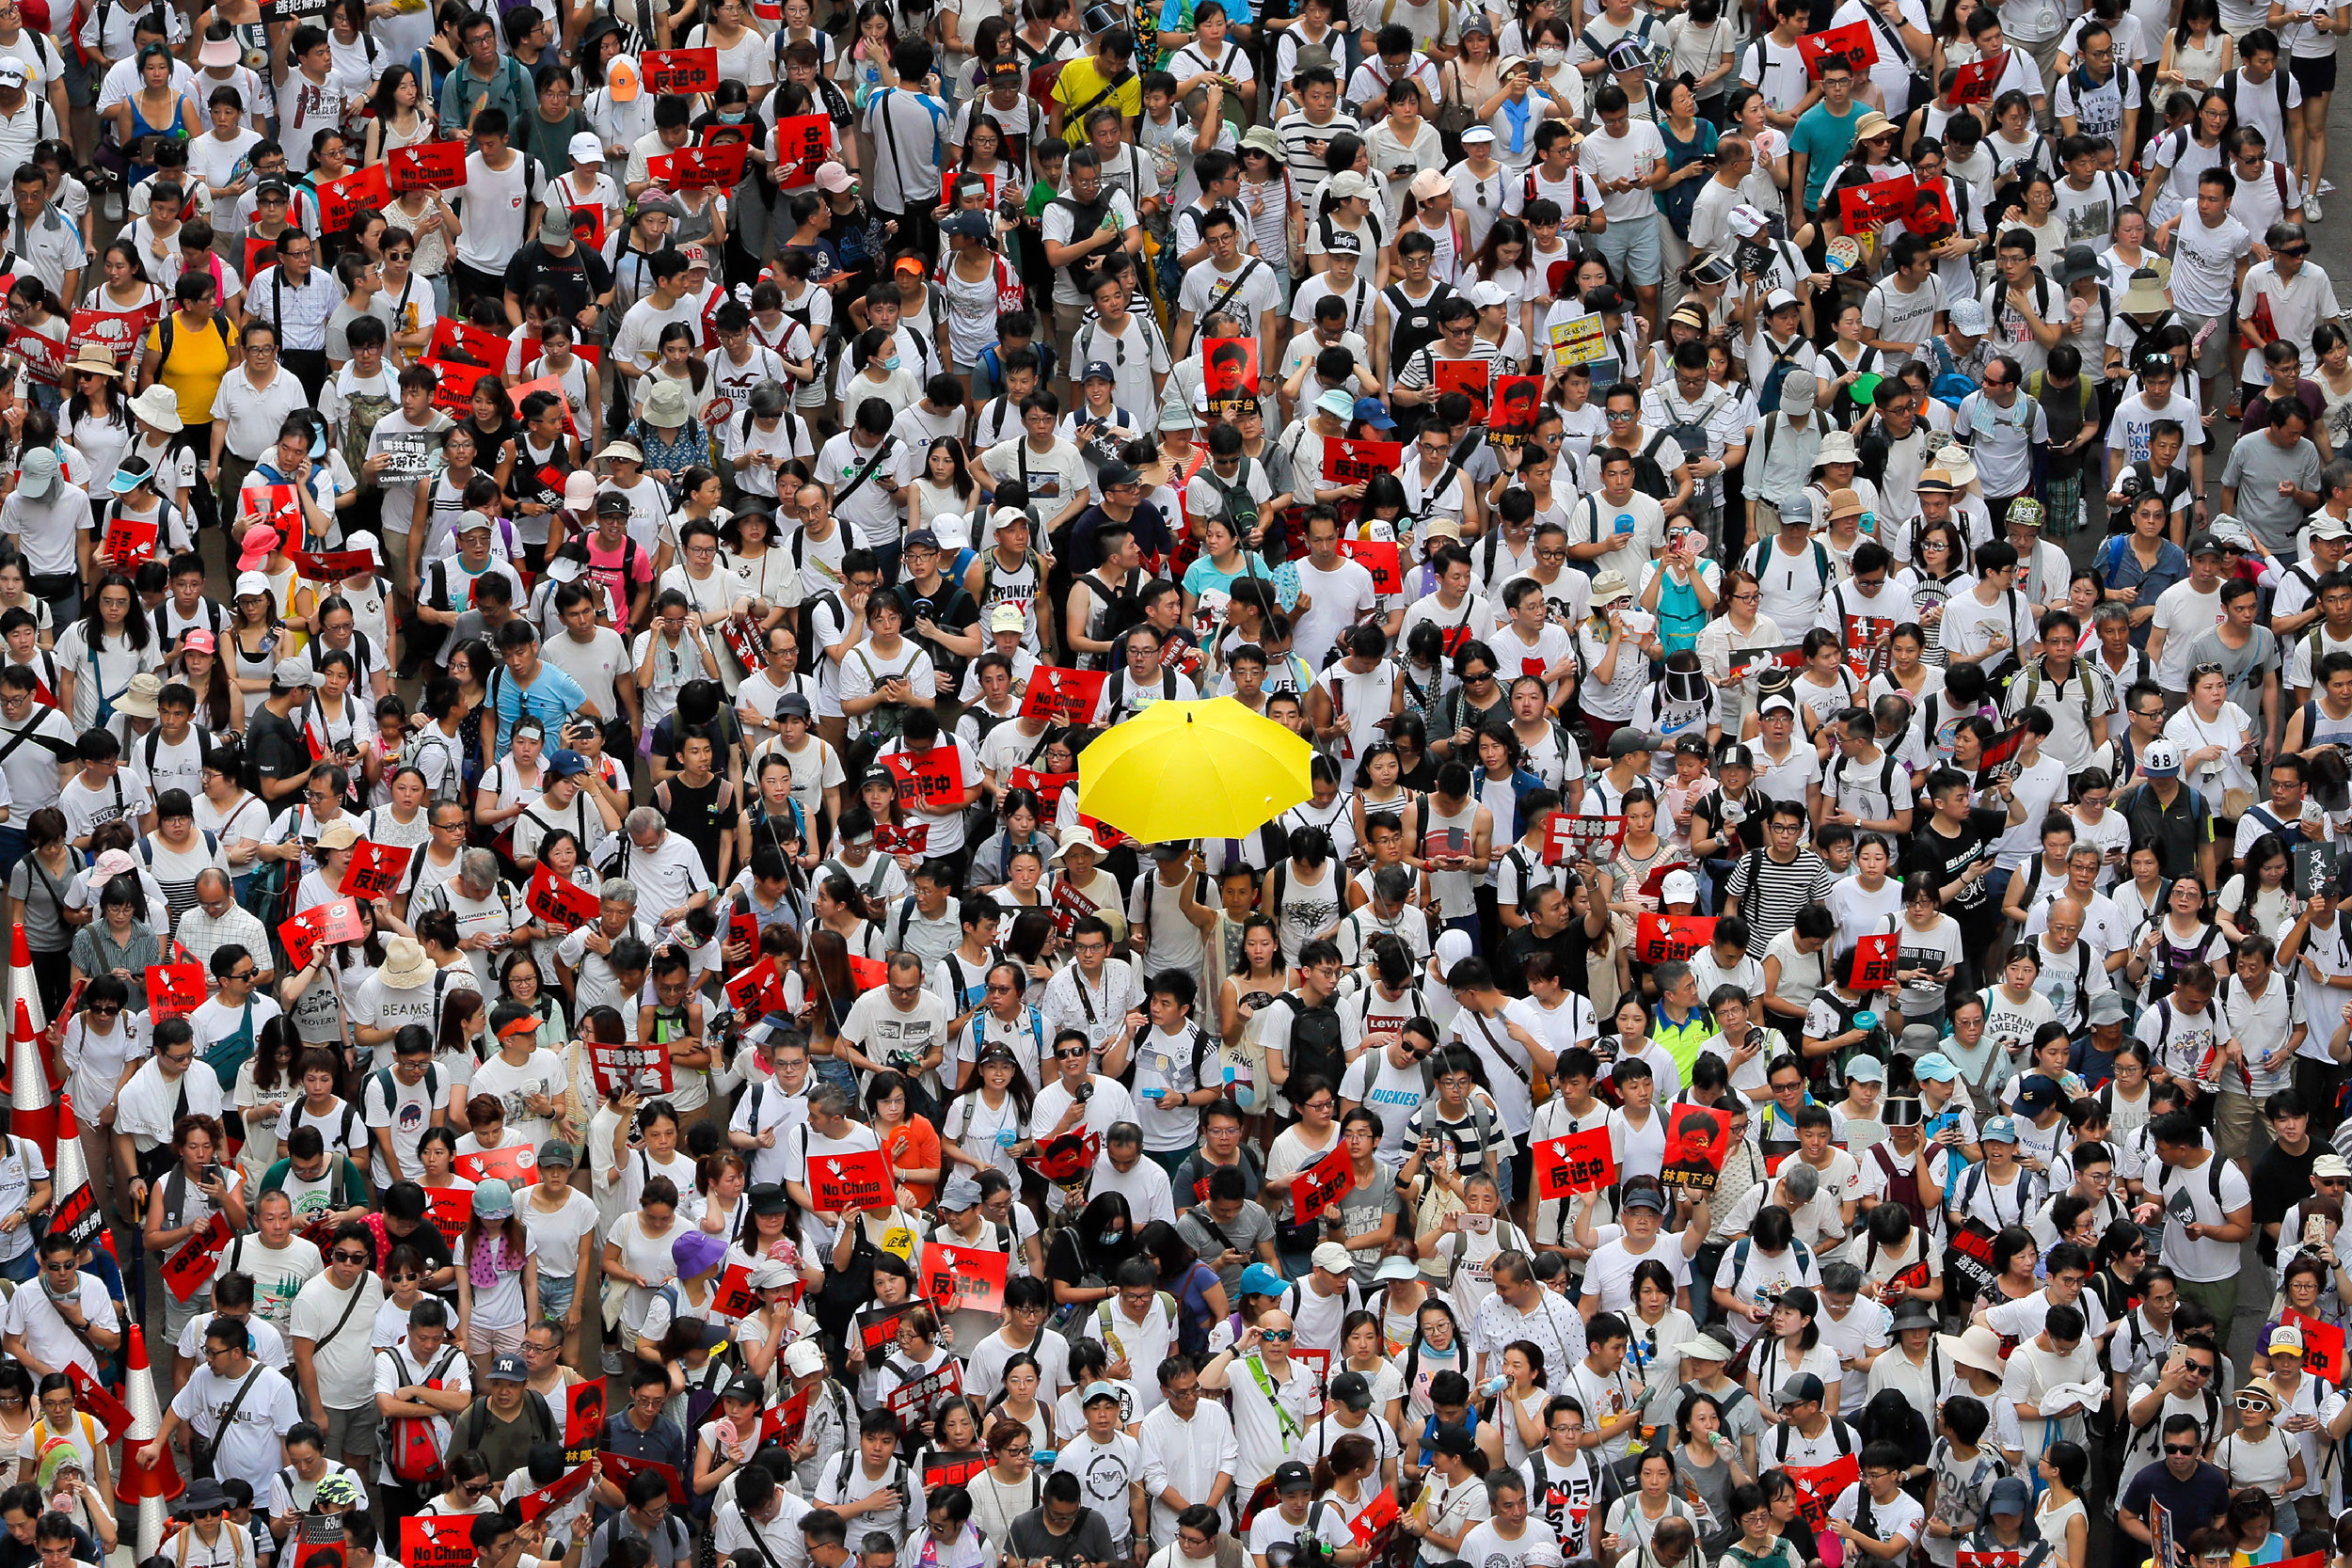 China extradition law protest rocks Hong Kong